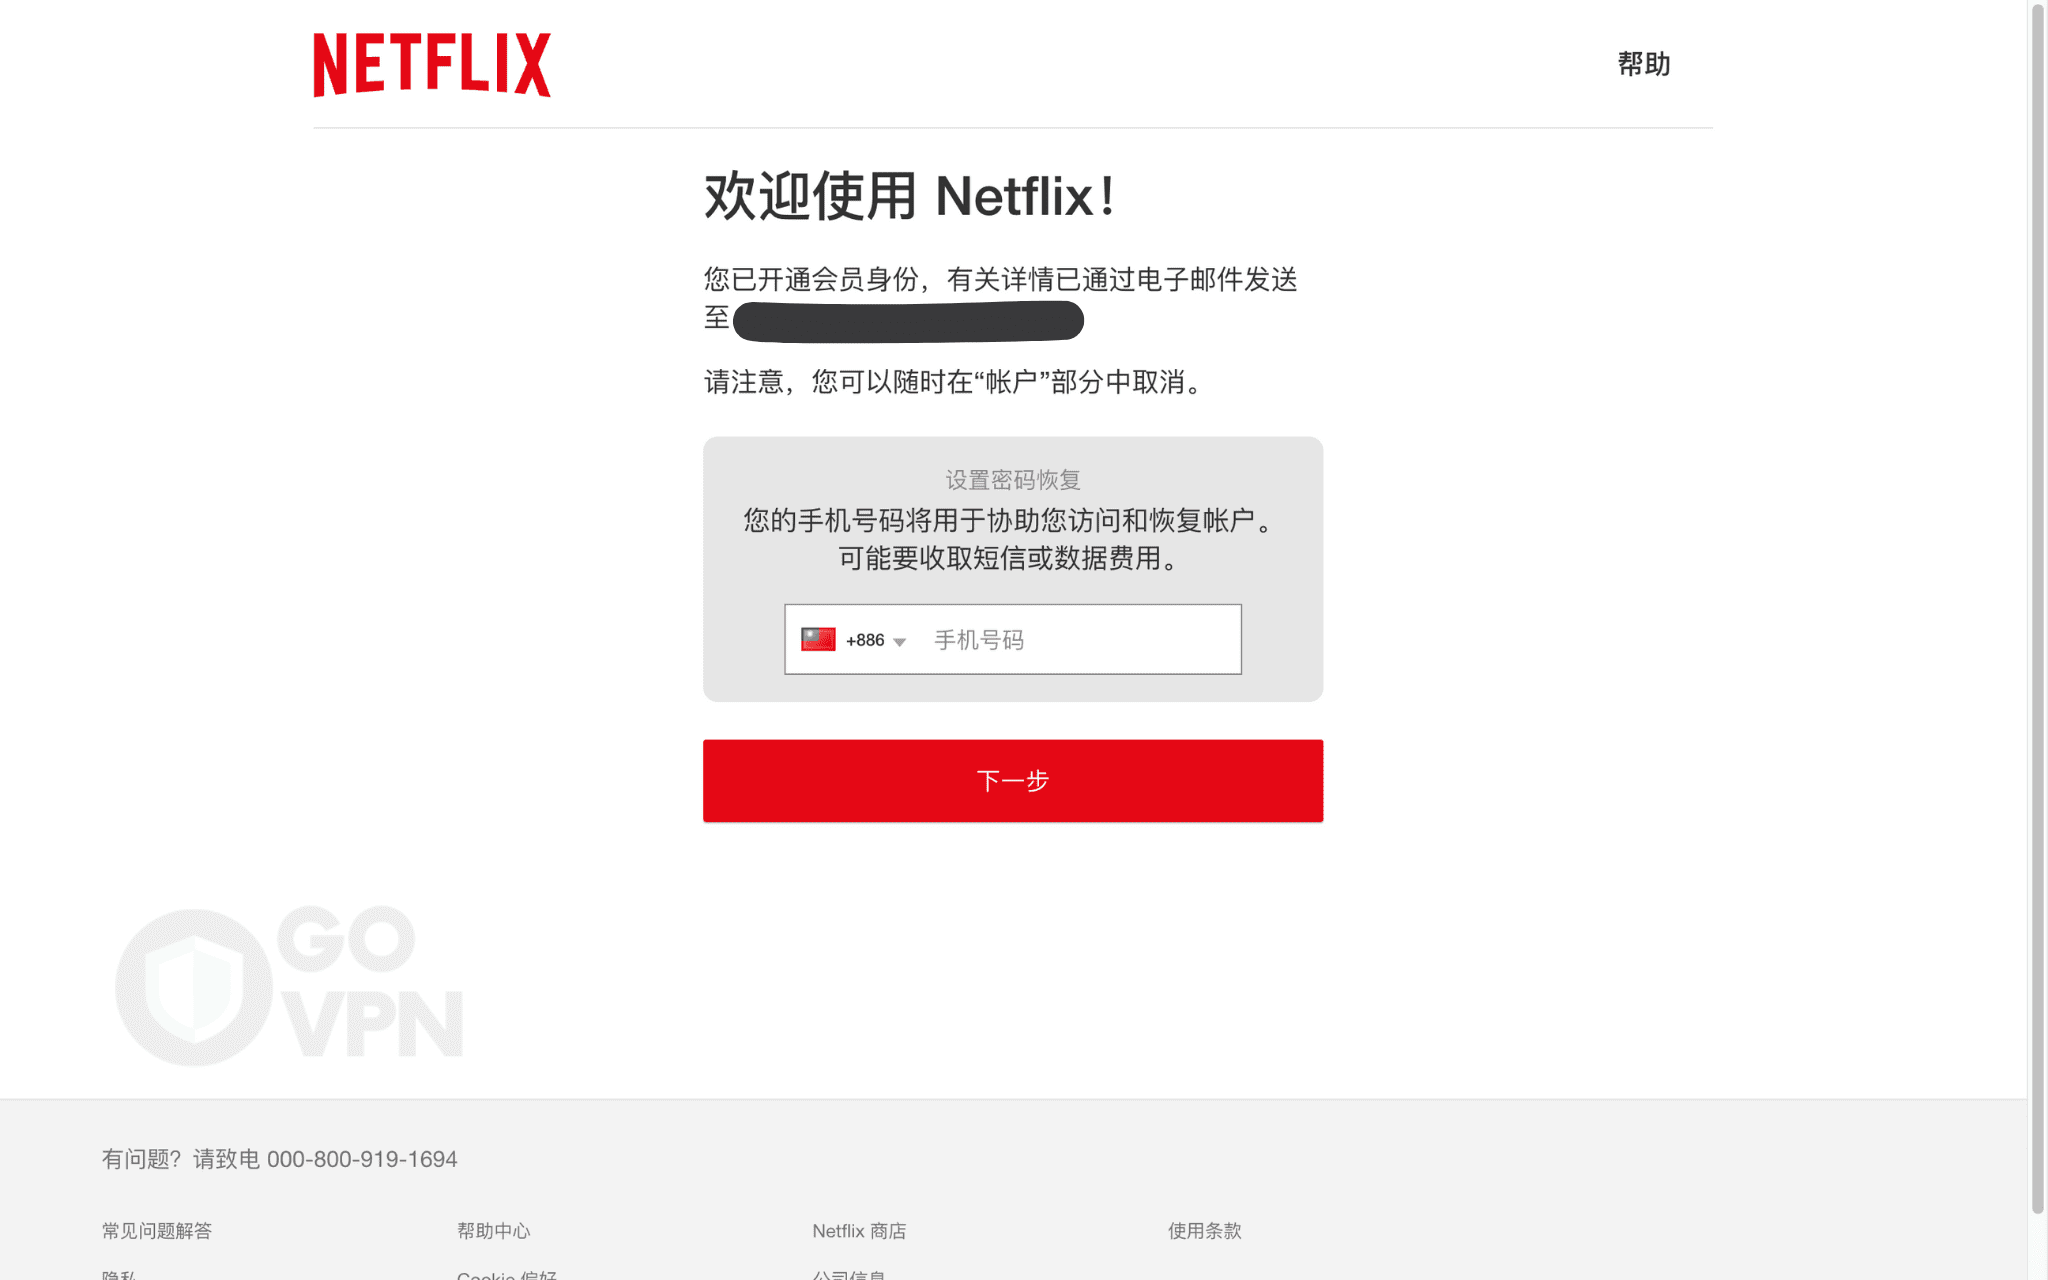 Netflix VPN 印度訂閱步驟教學7